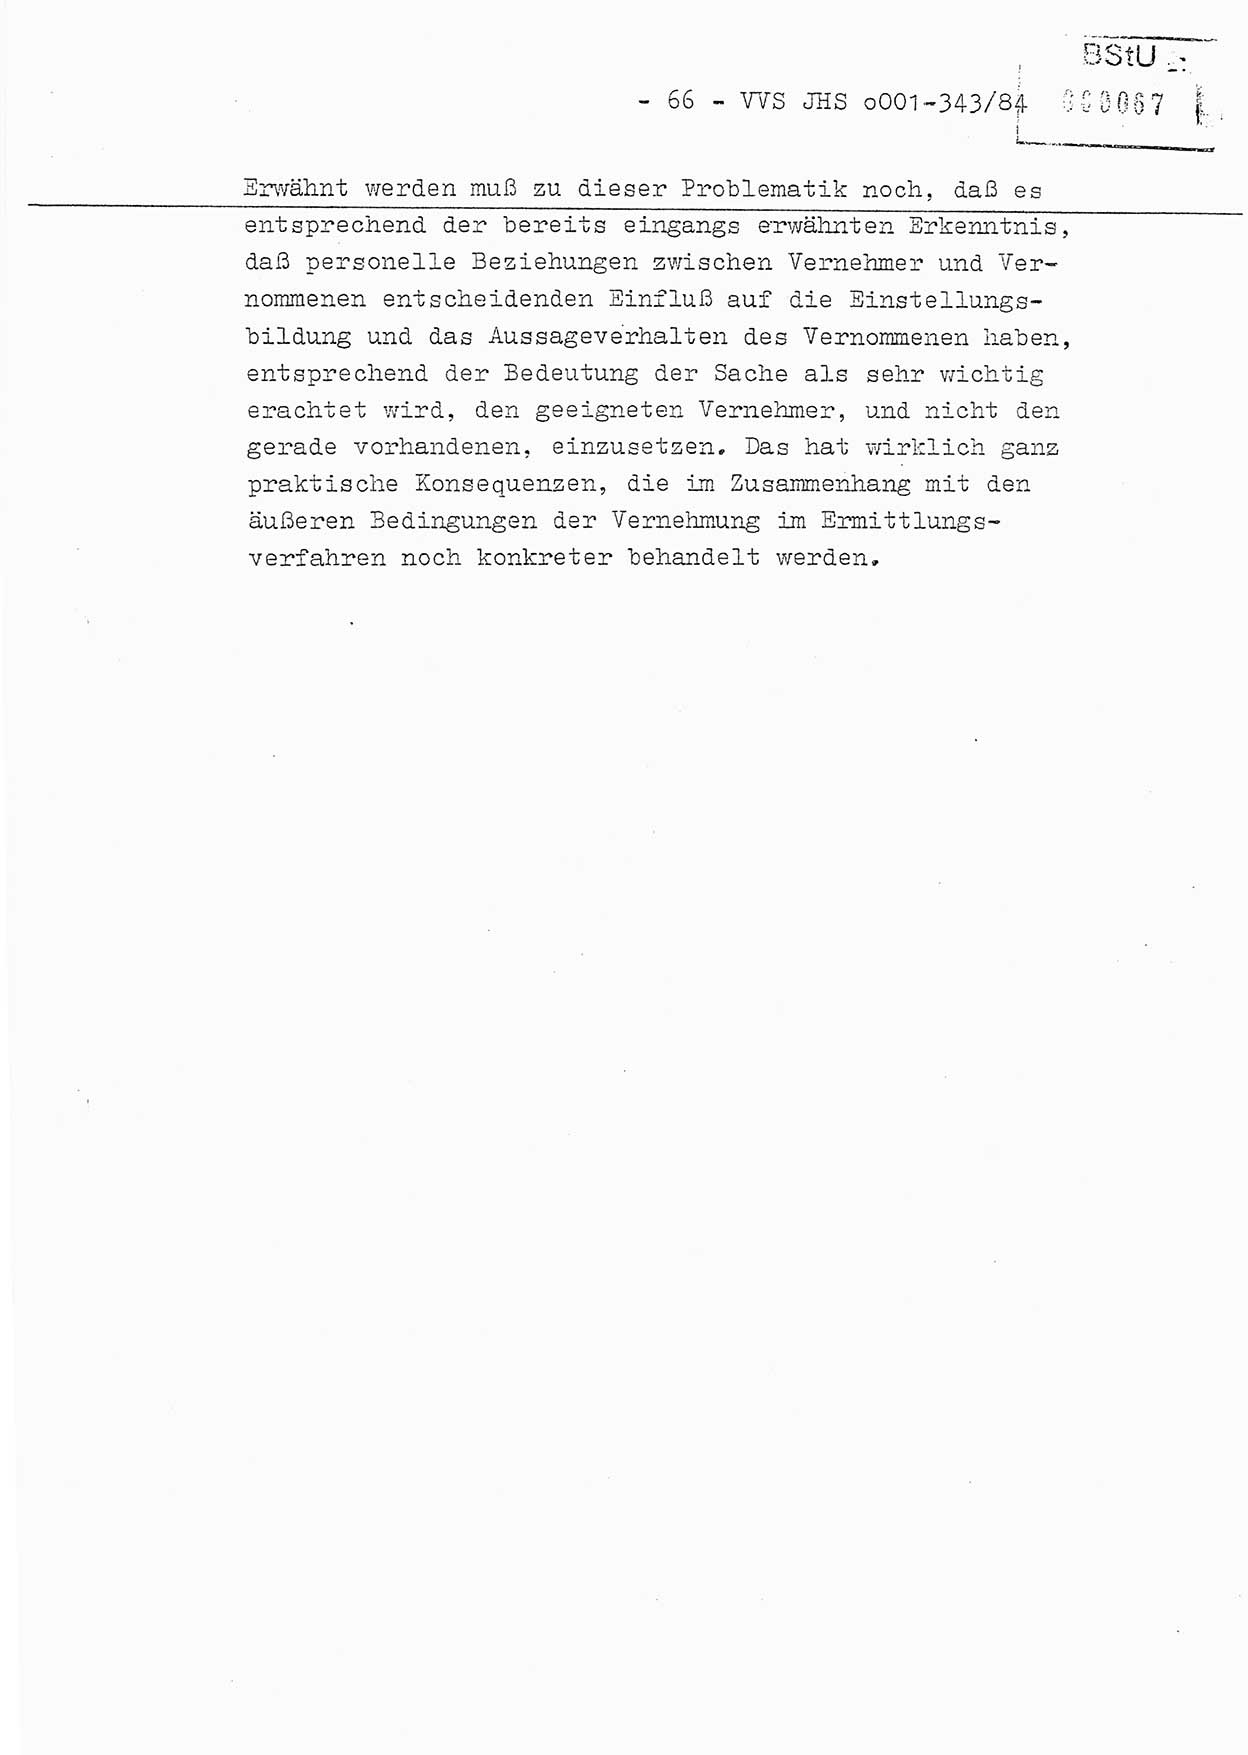 Diplomarbeit, Oberleutnant Bernd Michael (HA Ⅸ/5), Oberleutnant Peter Felber (HA IX/5), Ministerium für Staatssicherheit (MfS) [Deutsche Demokratische Republik (DDR)], Juristische Hochschule (JHS), Vertrauliche Verschlußsache (VVS) o001-343/84, Potsdam 1985, Seite 66 (Dipl.-Arb. MfS DDR JHS VVS o001-343/84 1985, S. 66)